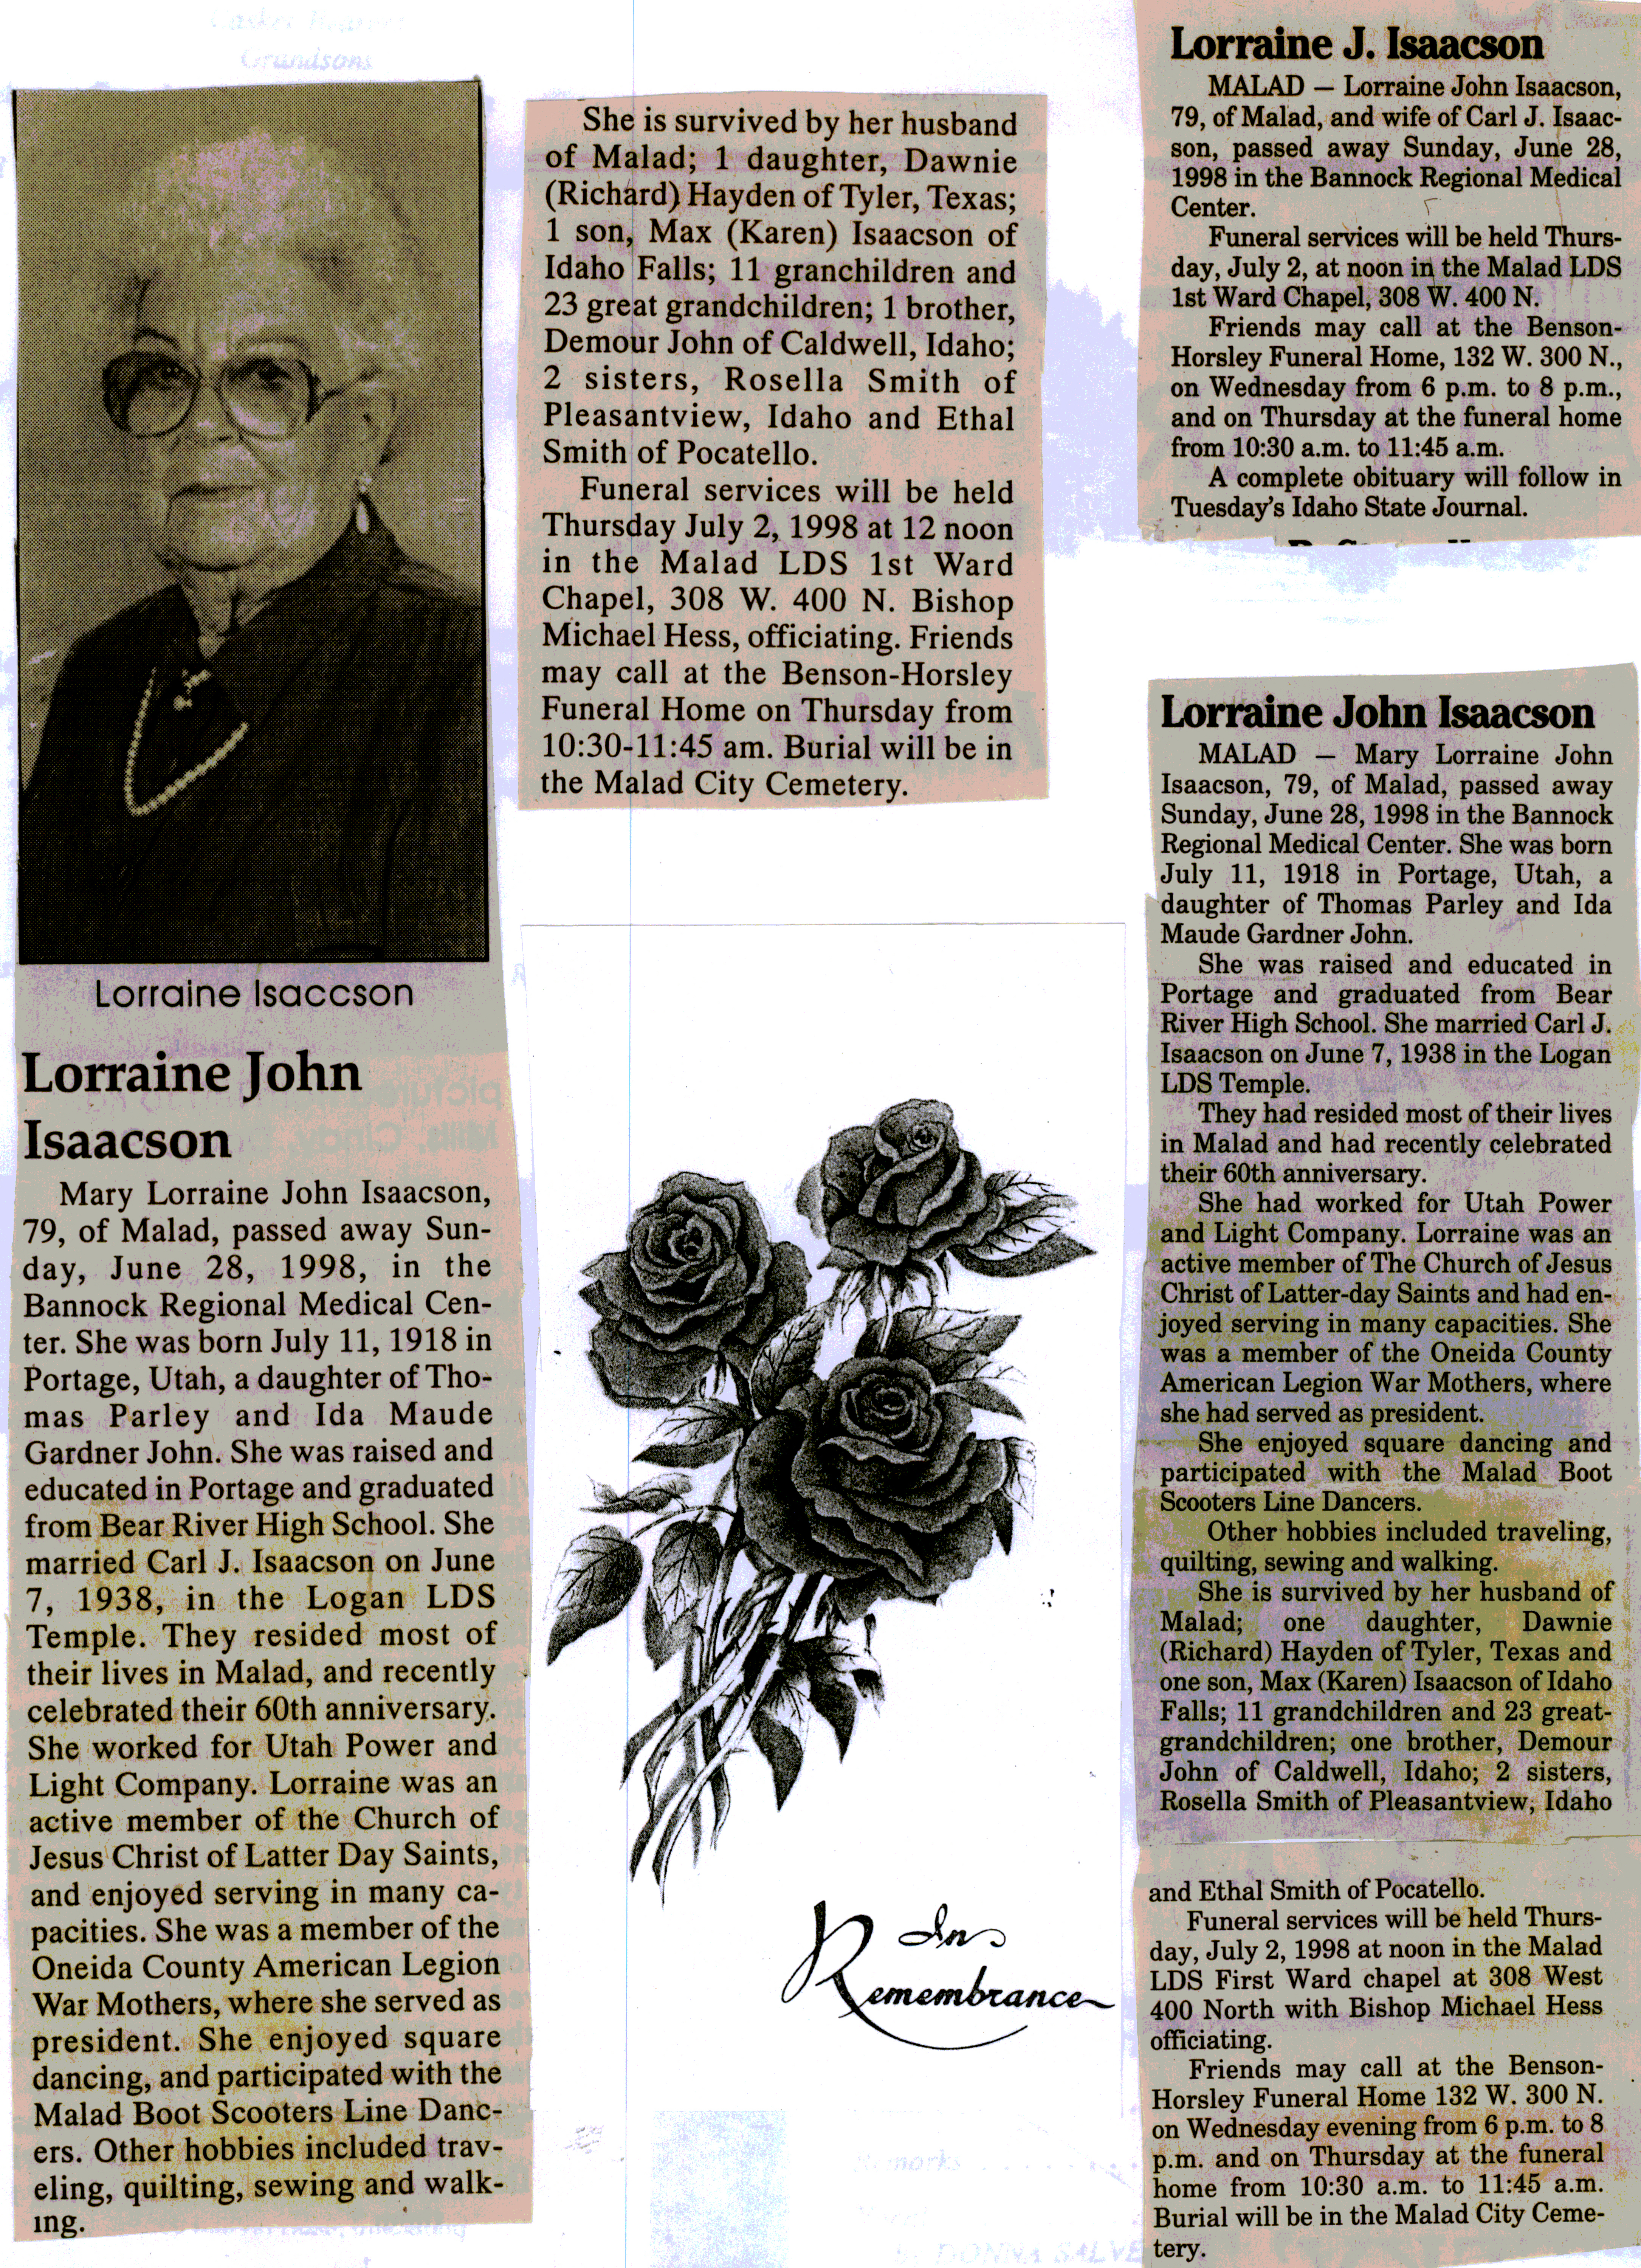 Mary Lorraine John Isaacson obits